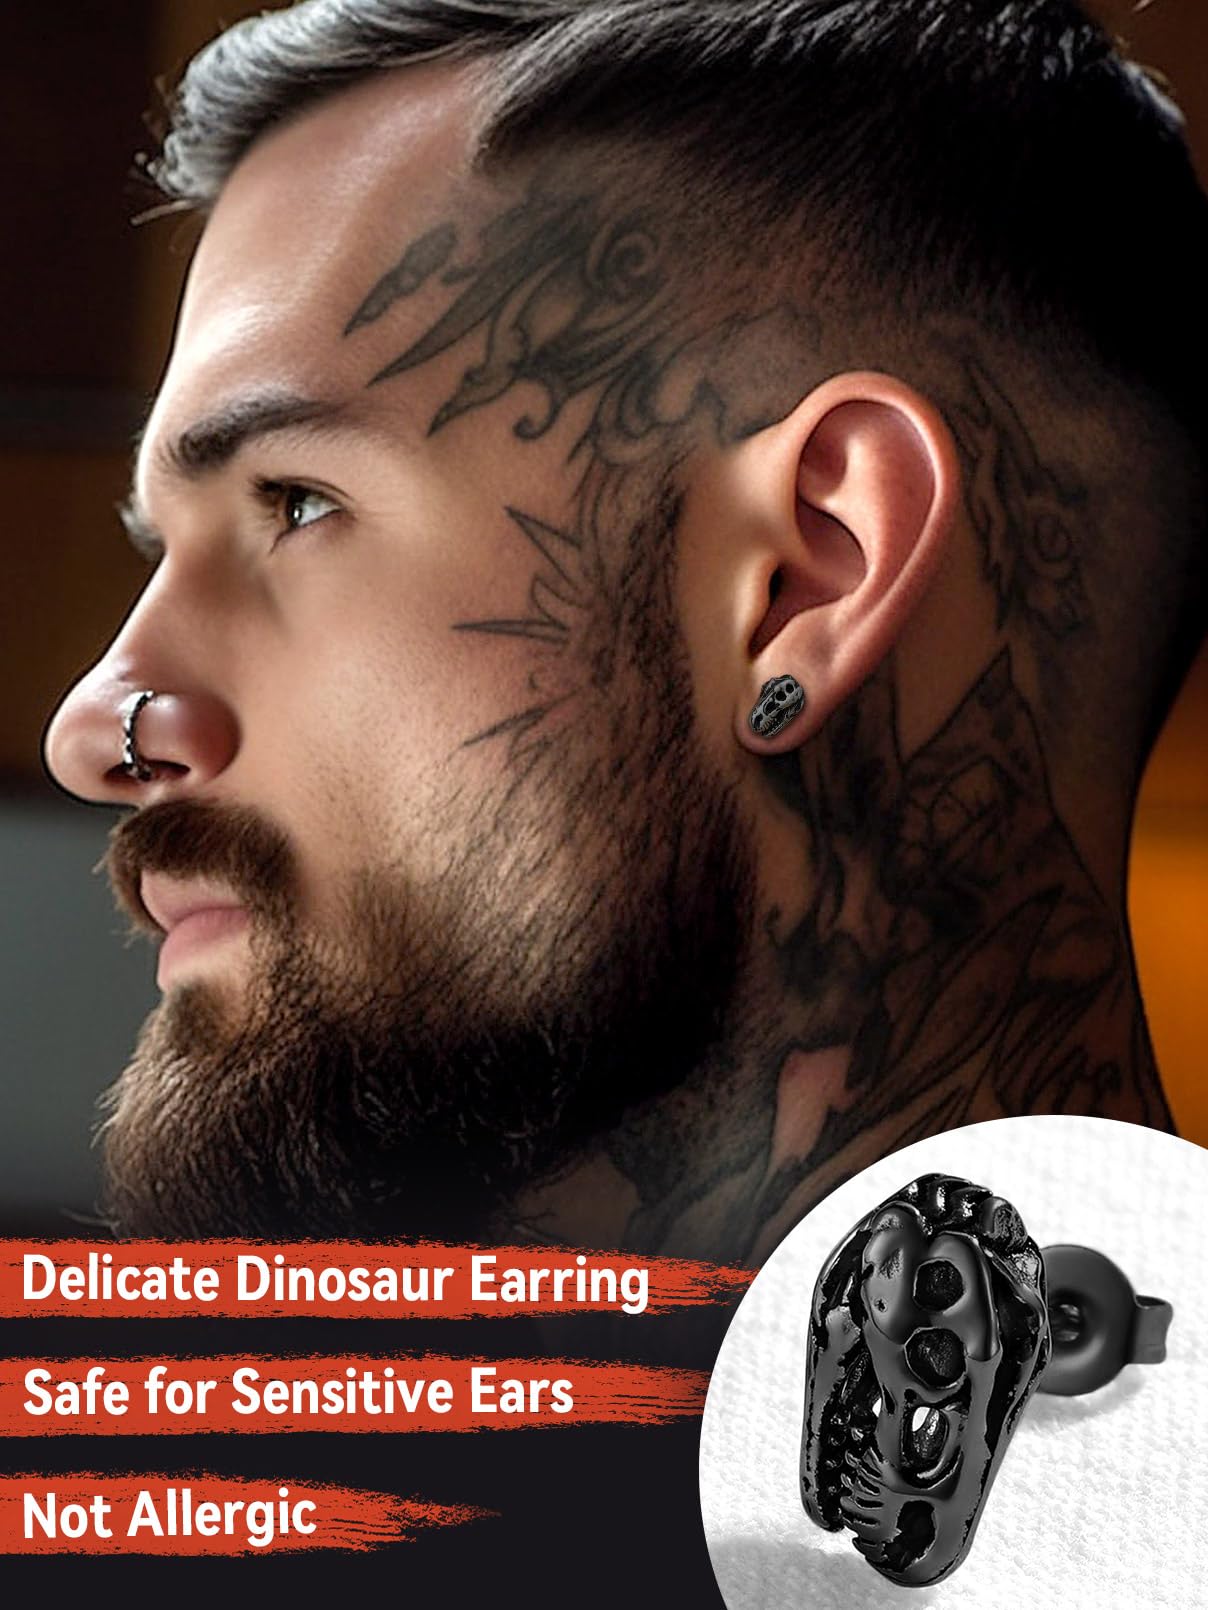 FaithHeart Dragon/Dinosaur/Snake Hoop Earrings for Men, Sturdy Stainless Steel Punk Biker Animals Hypoallergenic Jewelry, Gift Box